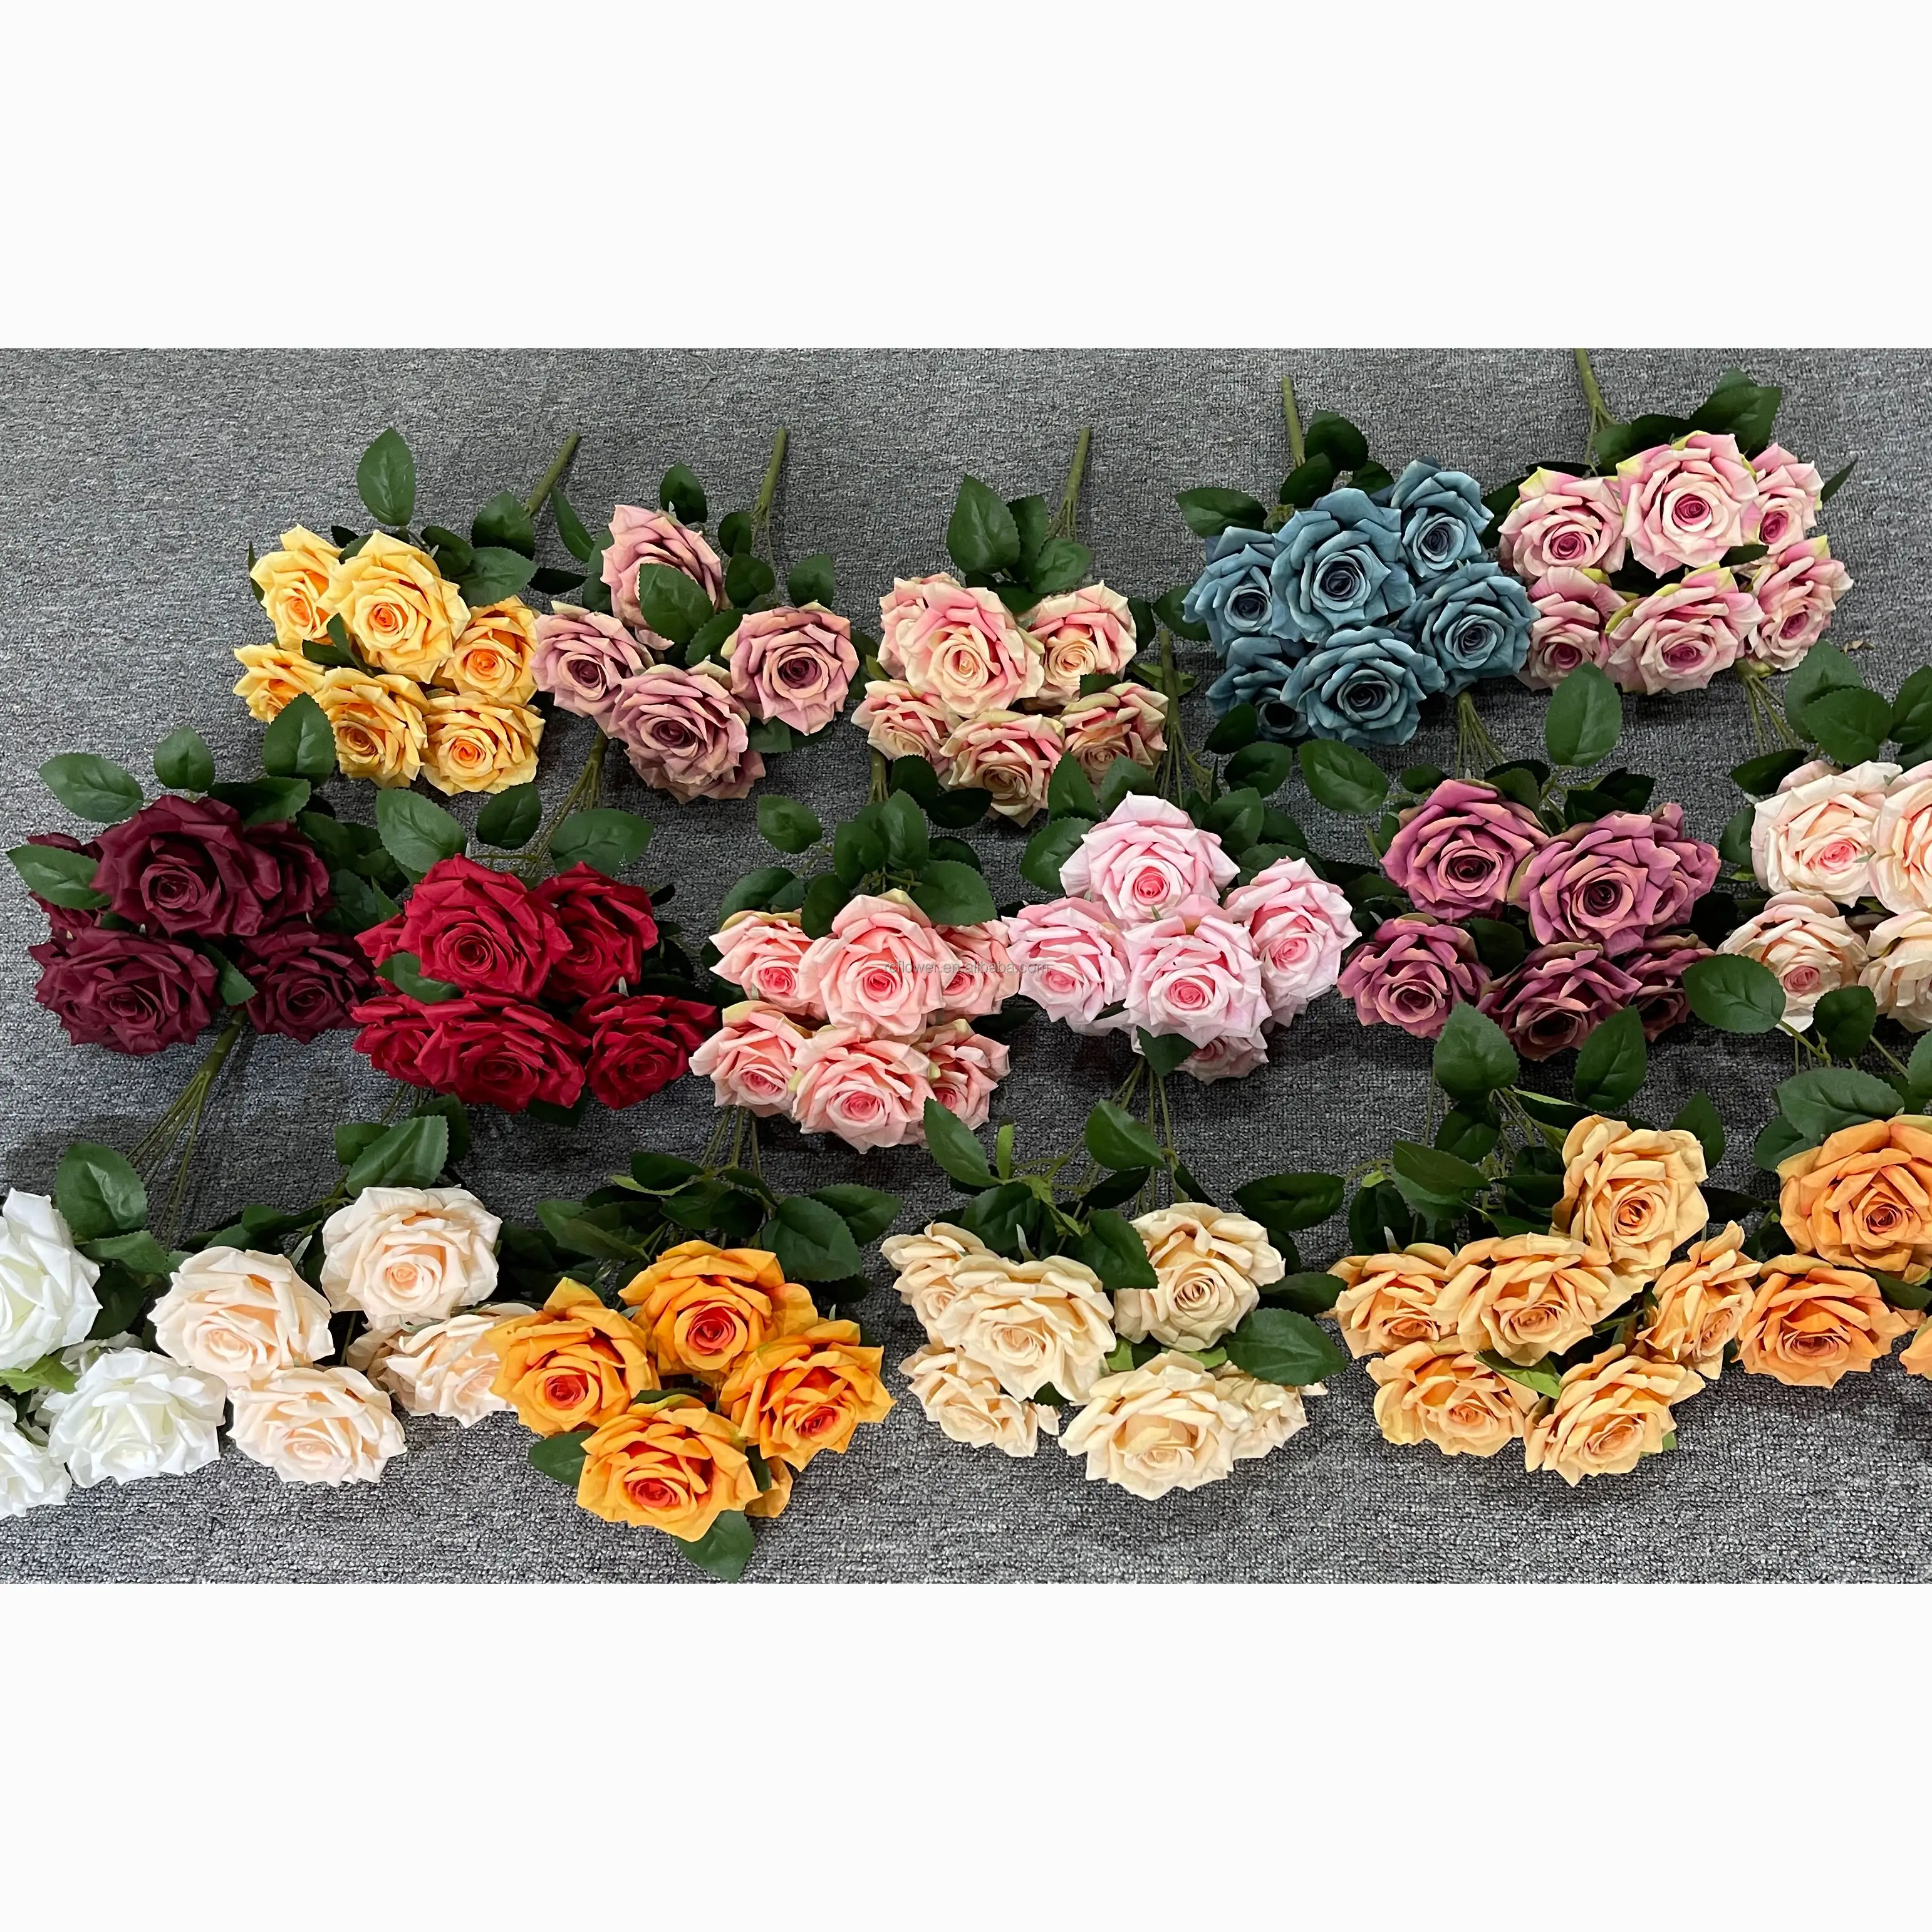 TCF wedding bouquet de fleurs de mariage floral arrangement 7 heads pink rose bushes real touch artificial silk rose bunch